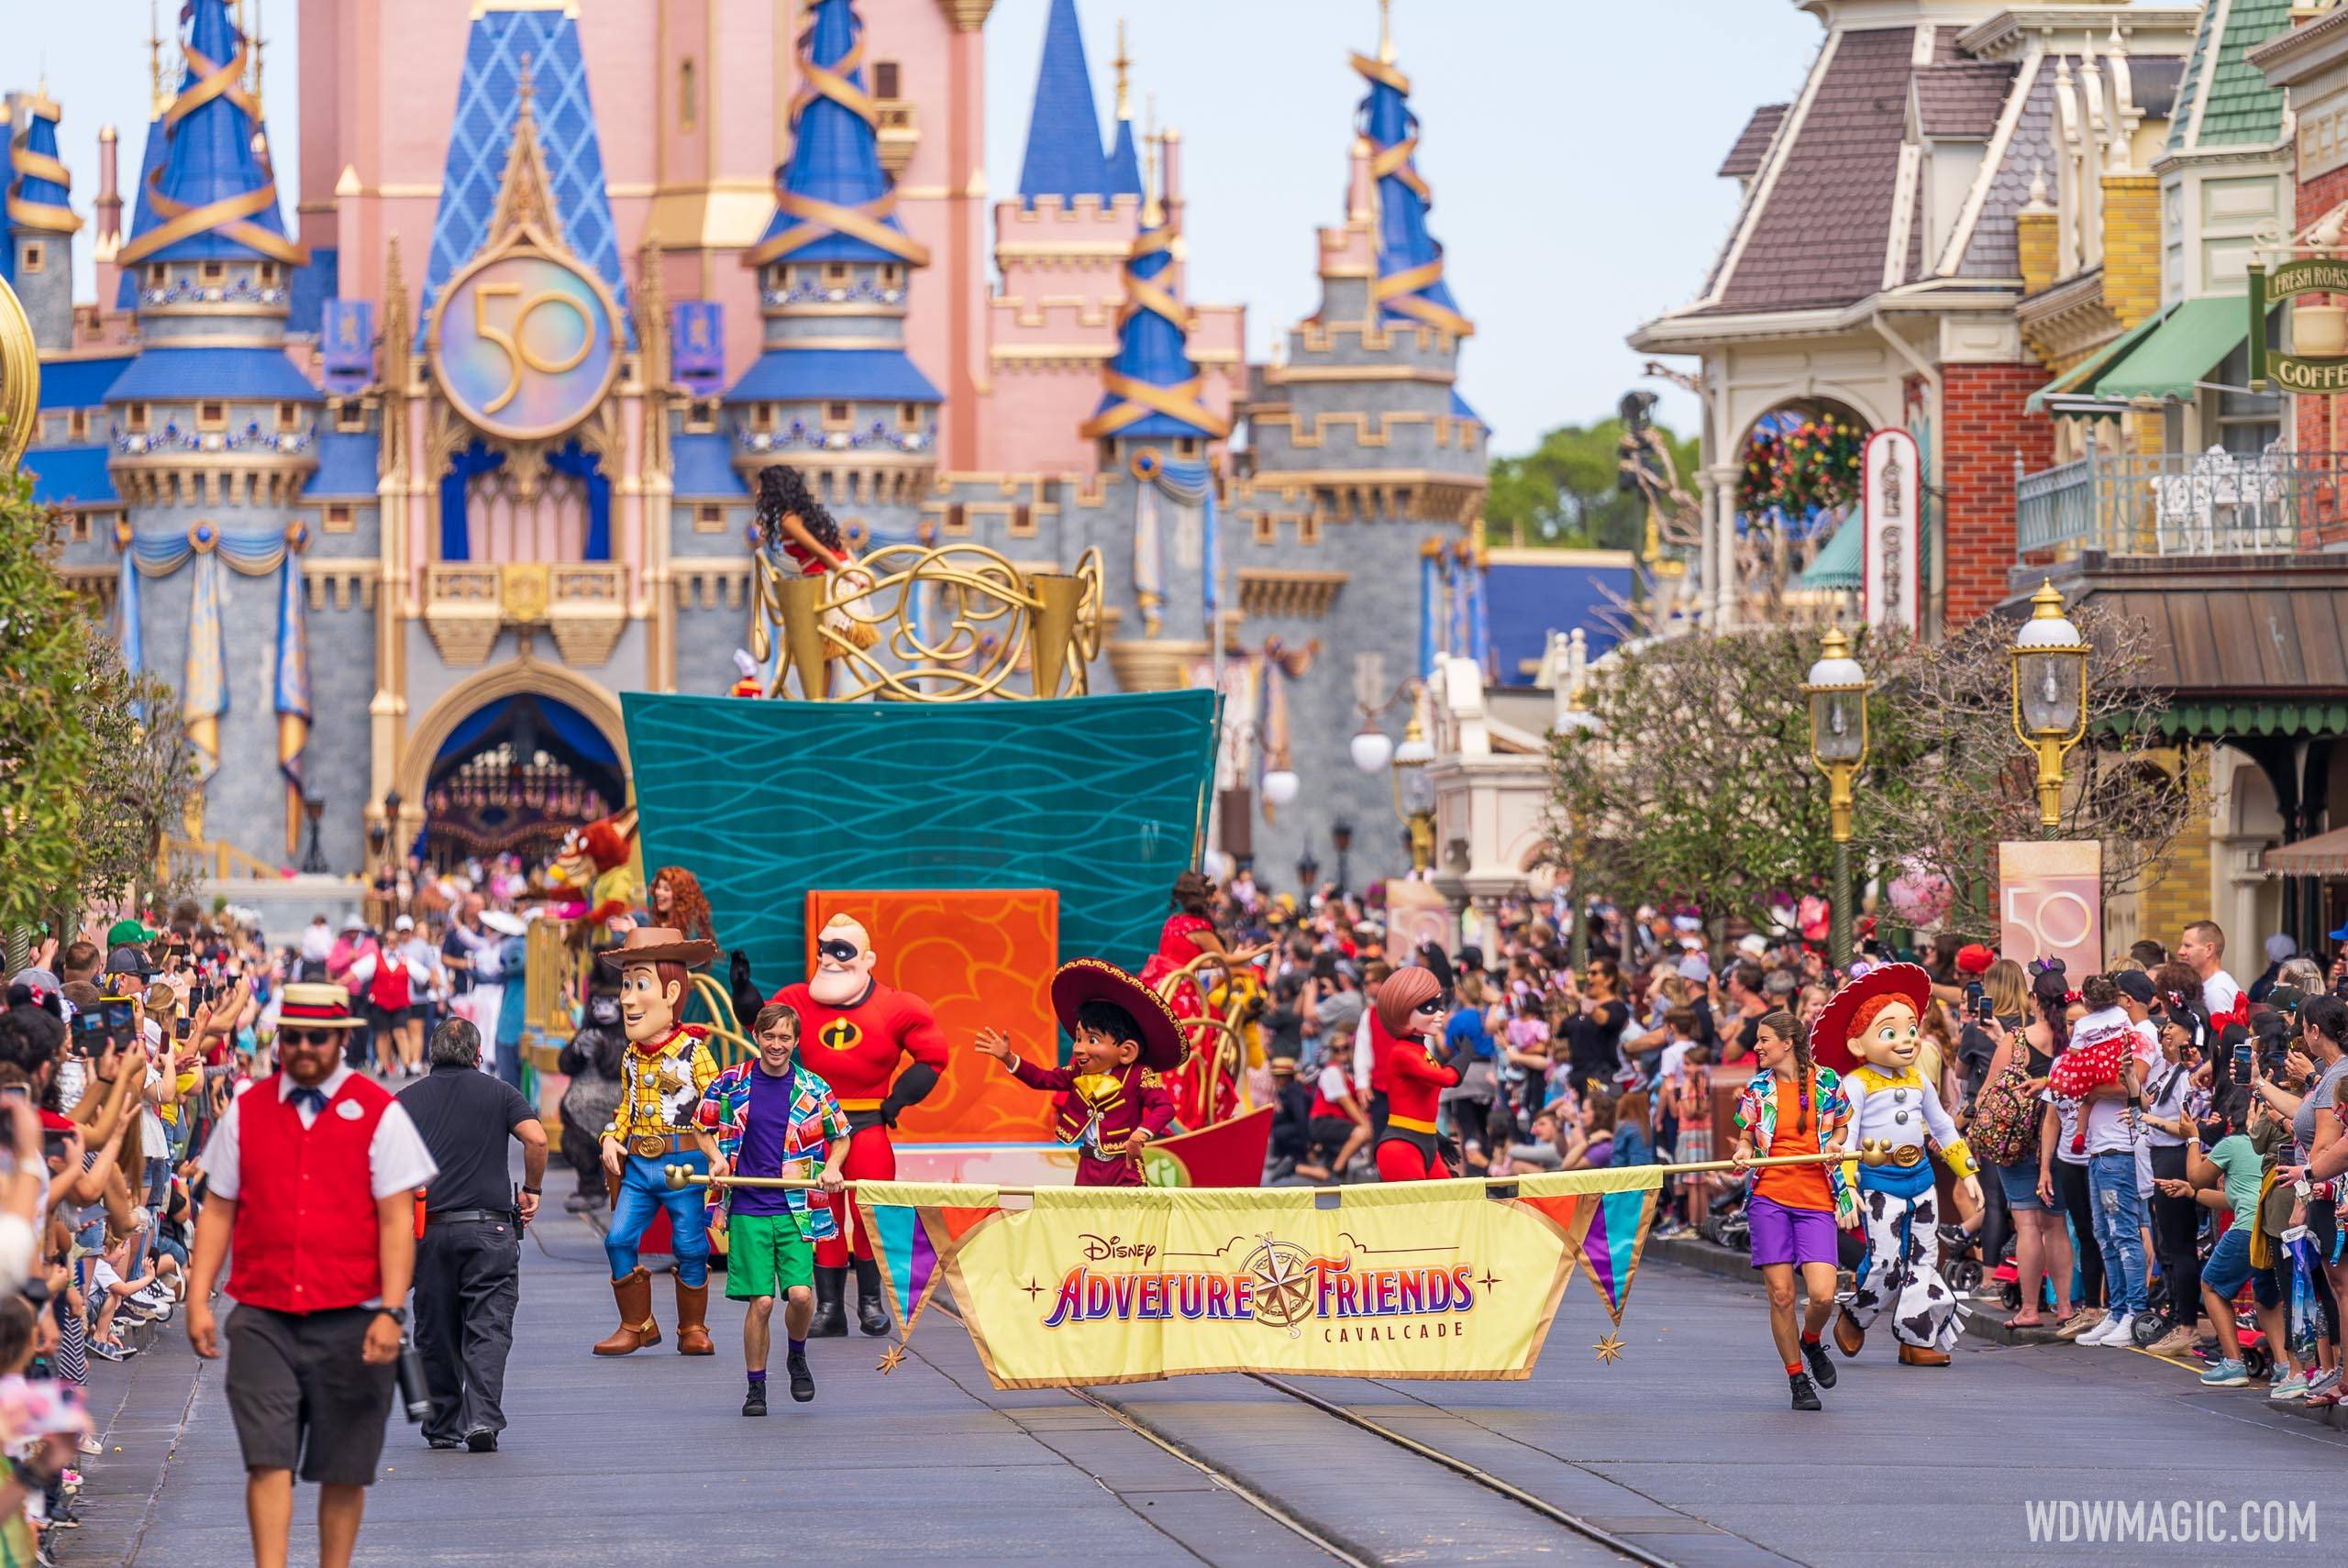 'Disney Adventure Friends Cavalcade' performances reduced as 'Disney Festival of Fantasy Parade' begins at Magic Kingdom